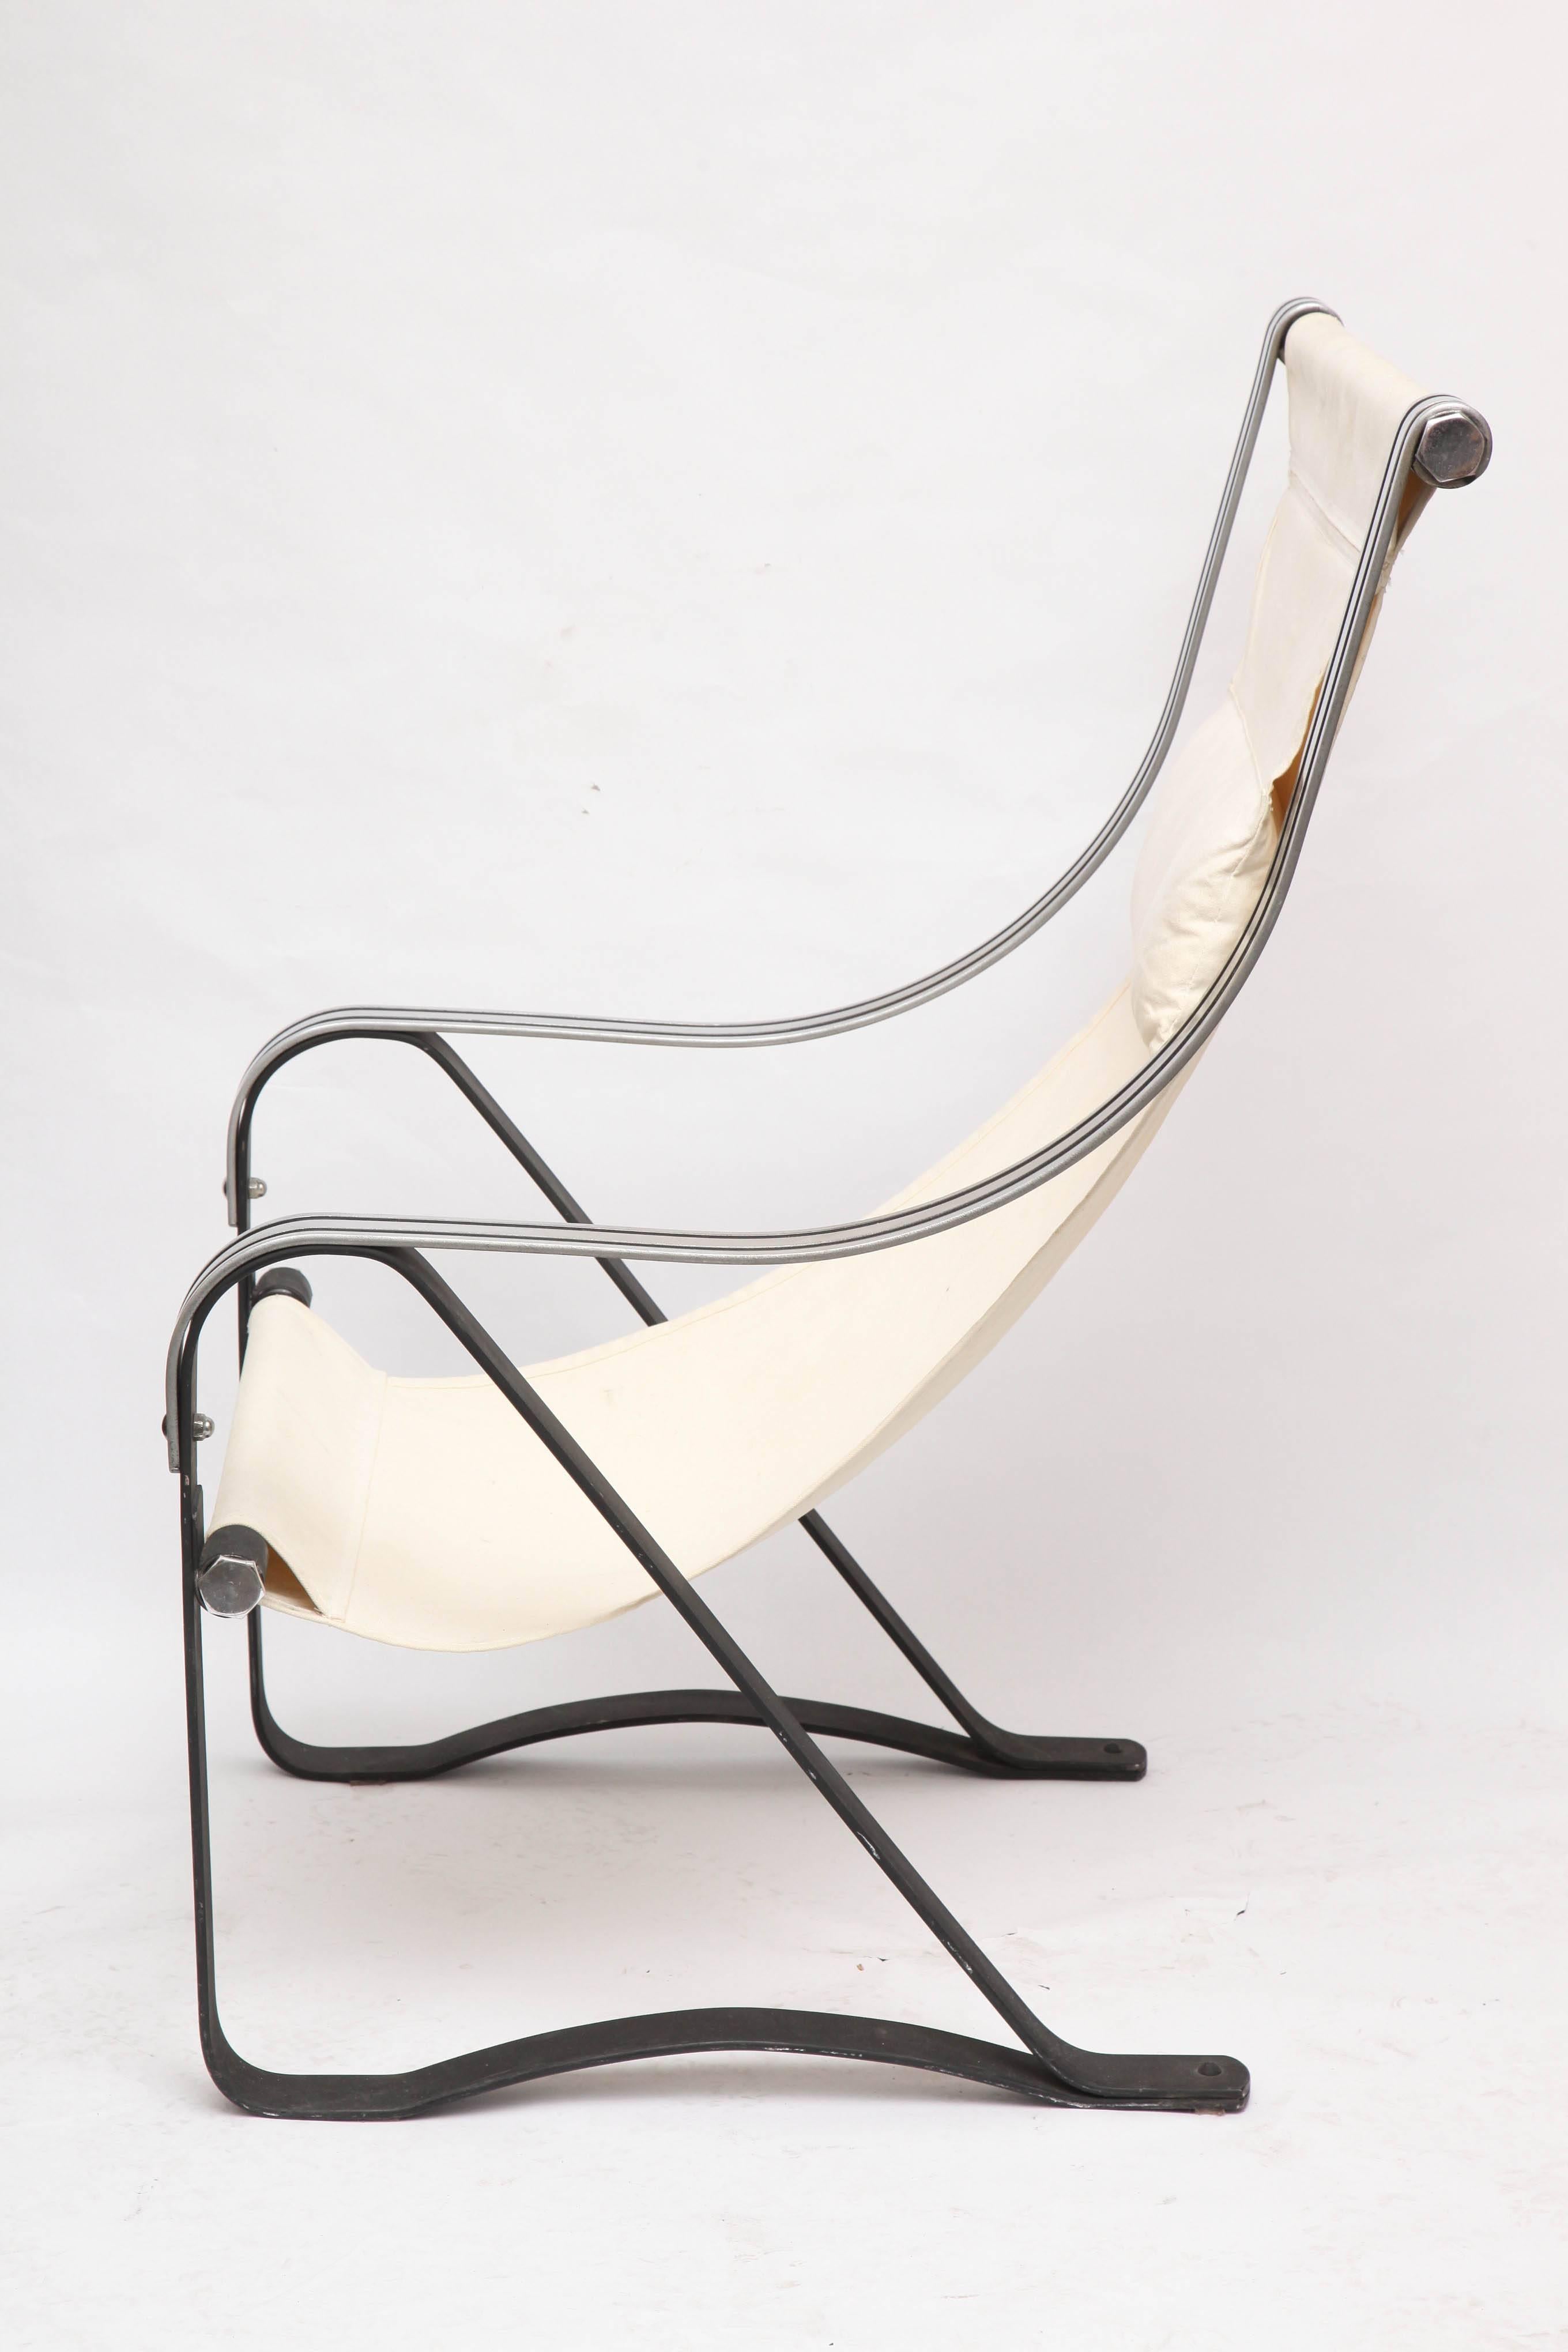 Nickel 1930s American Modernist Chair by Mc Kay